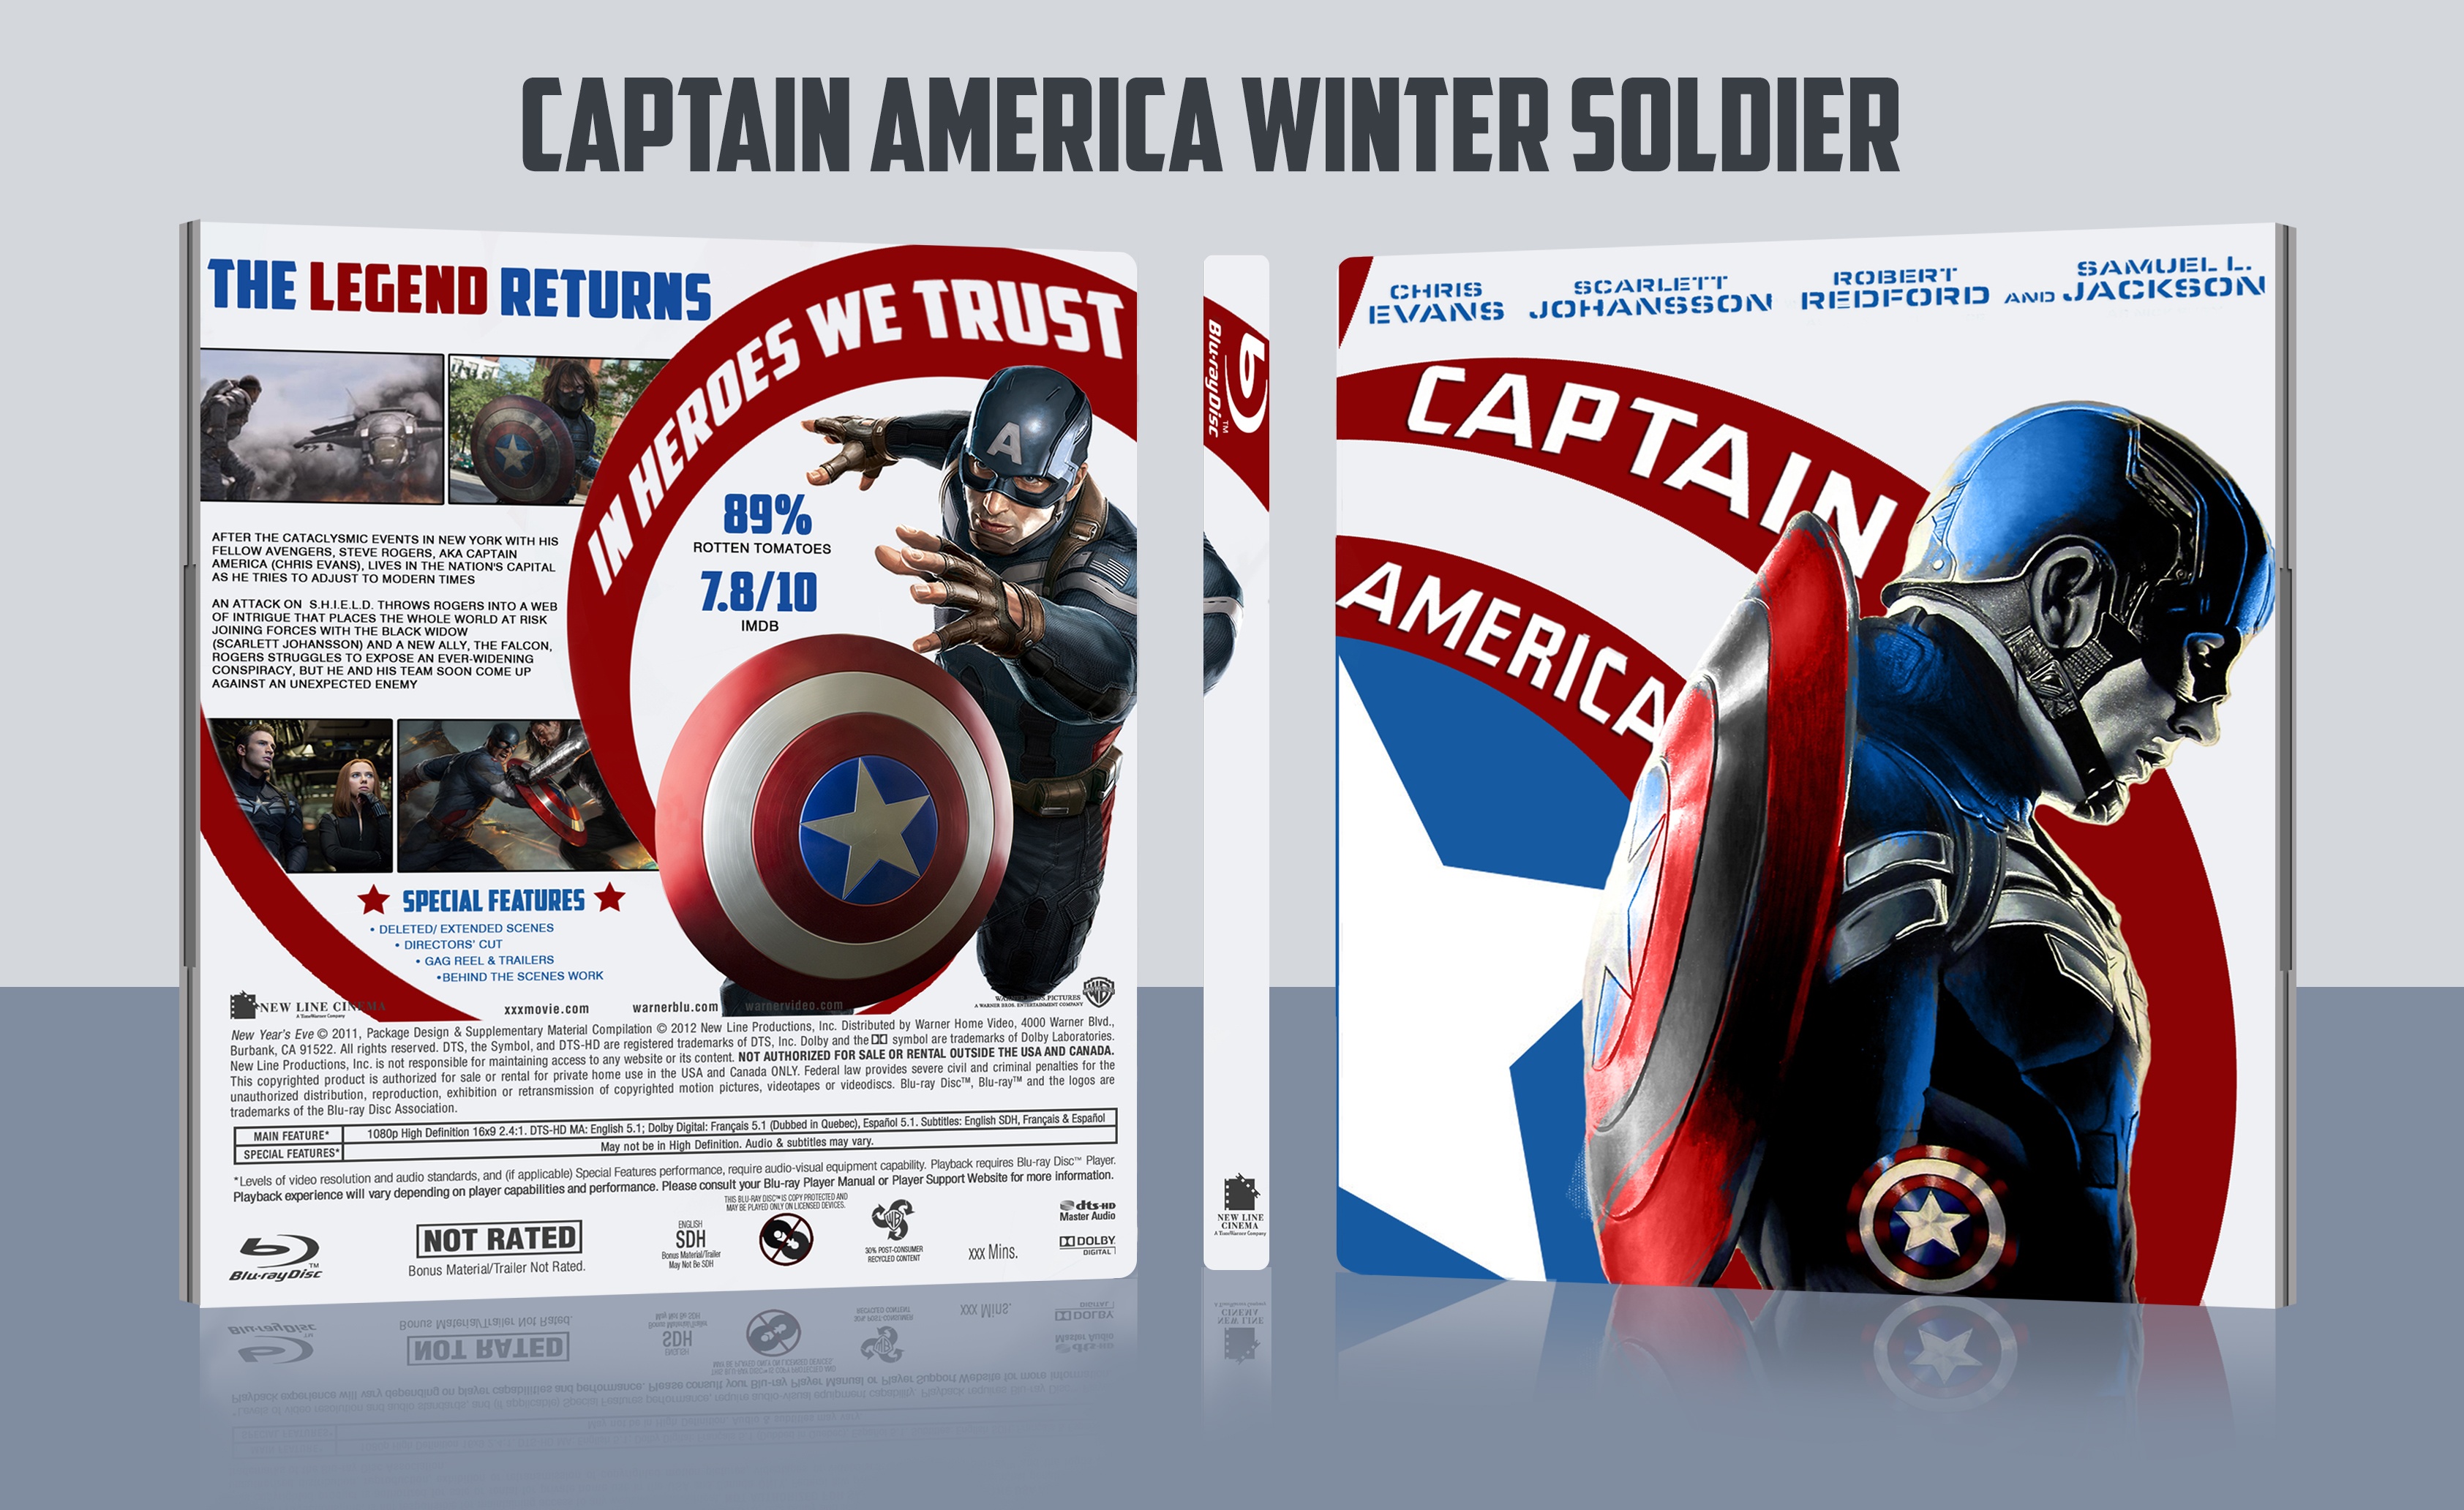 Captain America: The Winter Soldier box cover